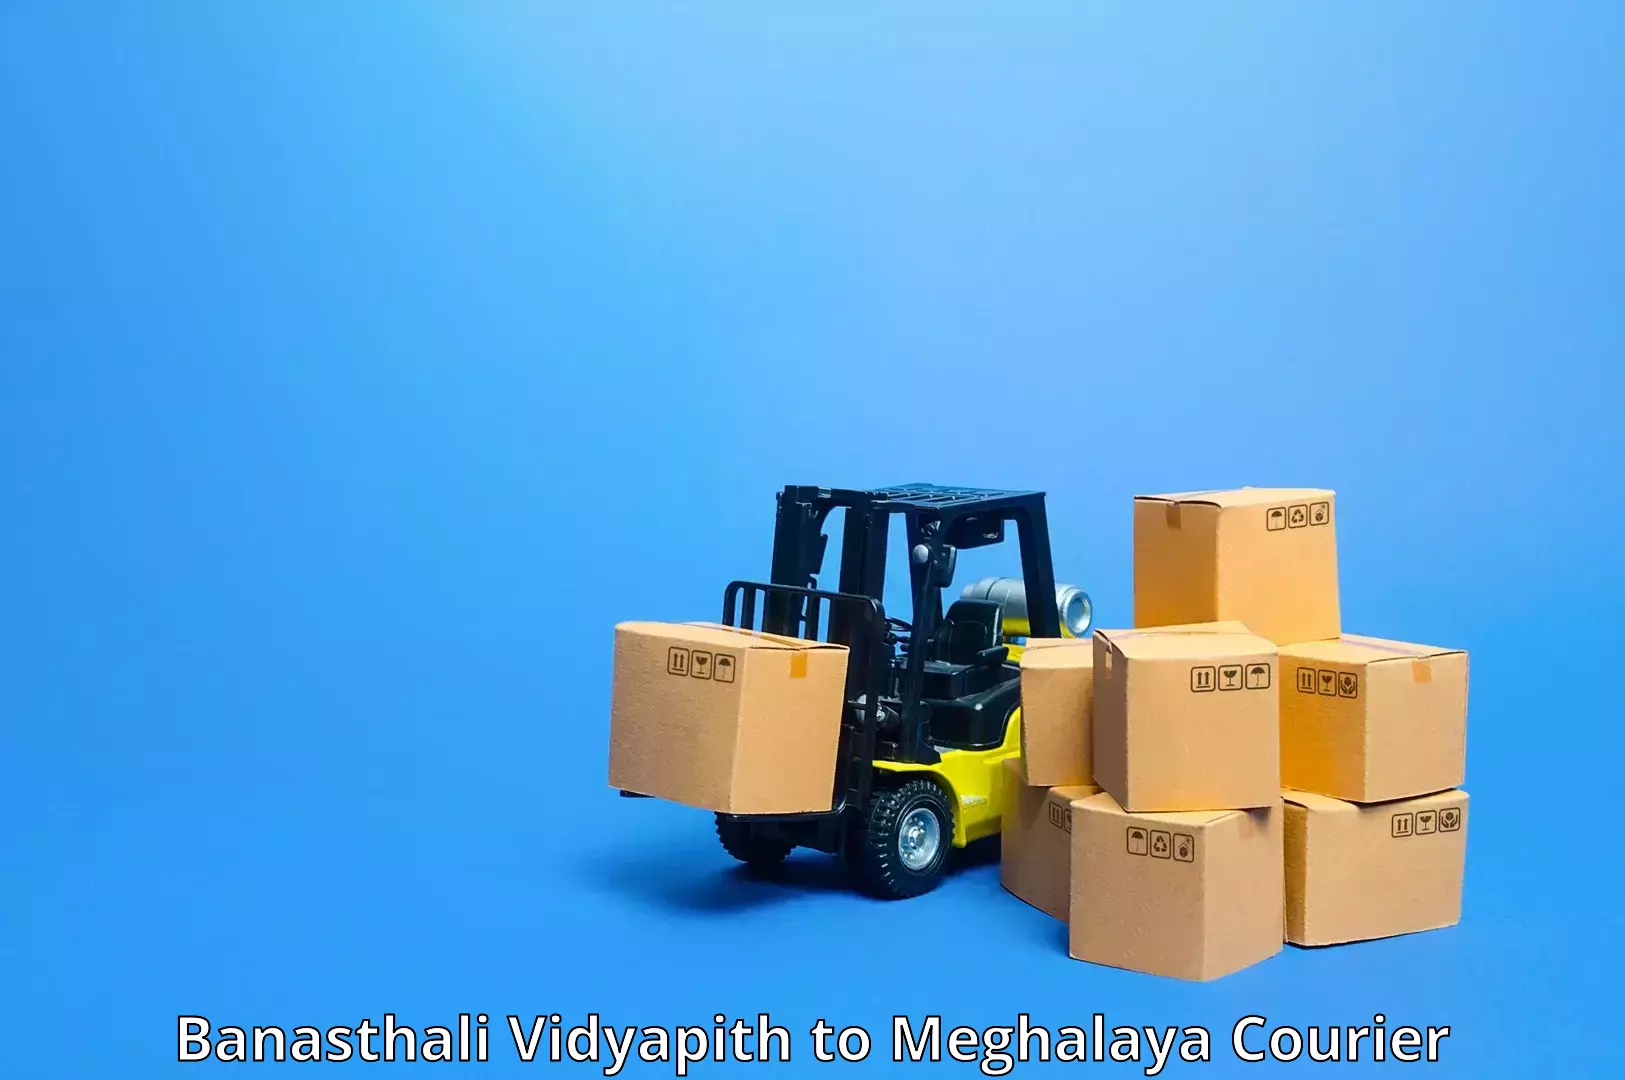 Express delivery capabilities Banasthali Vidyapith to Nongpoh